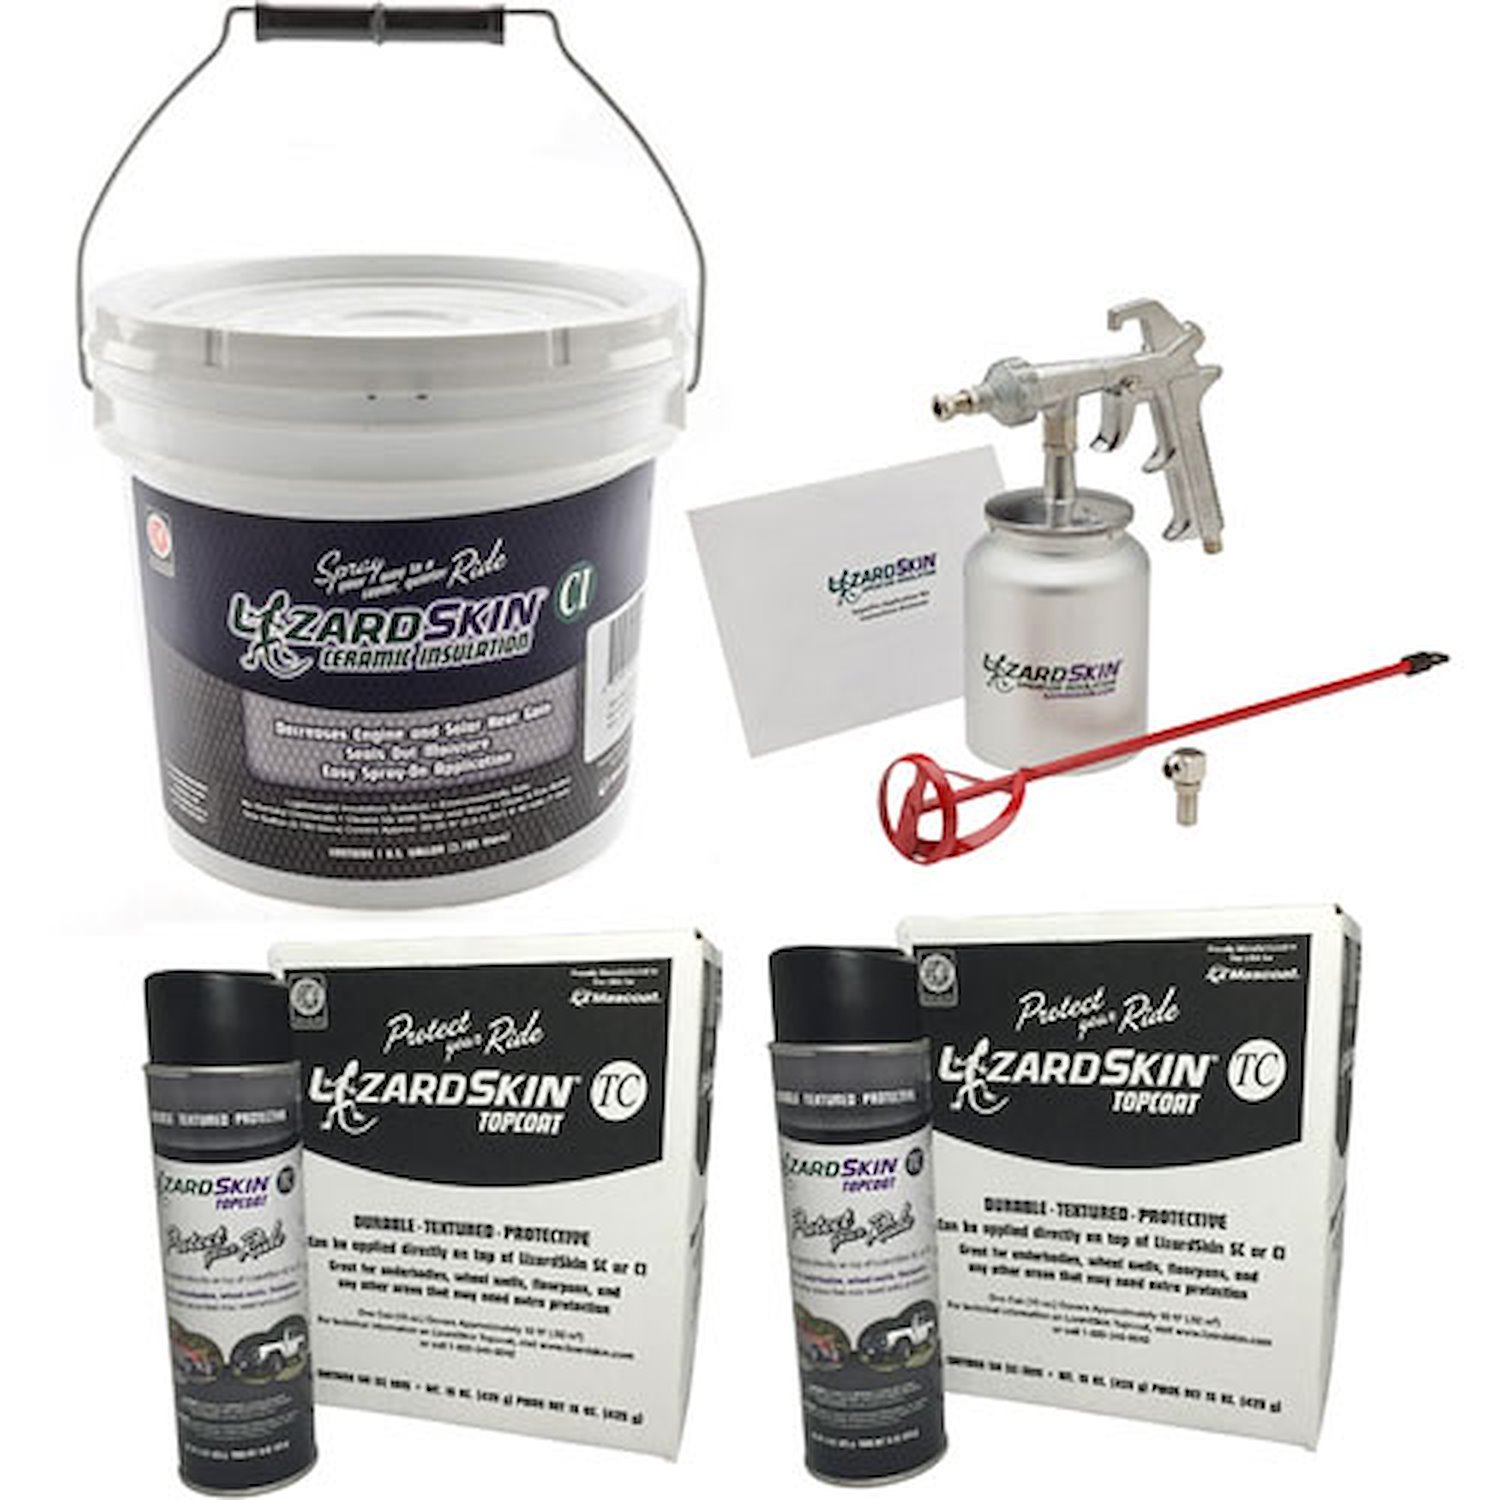 Ceramic Insulation And Gun Kit Includes: White Ceramic Insulation (1 Gallon)